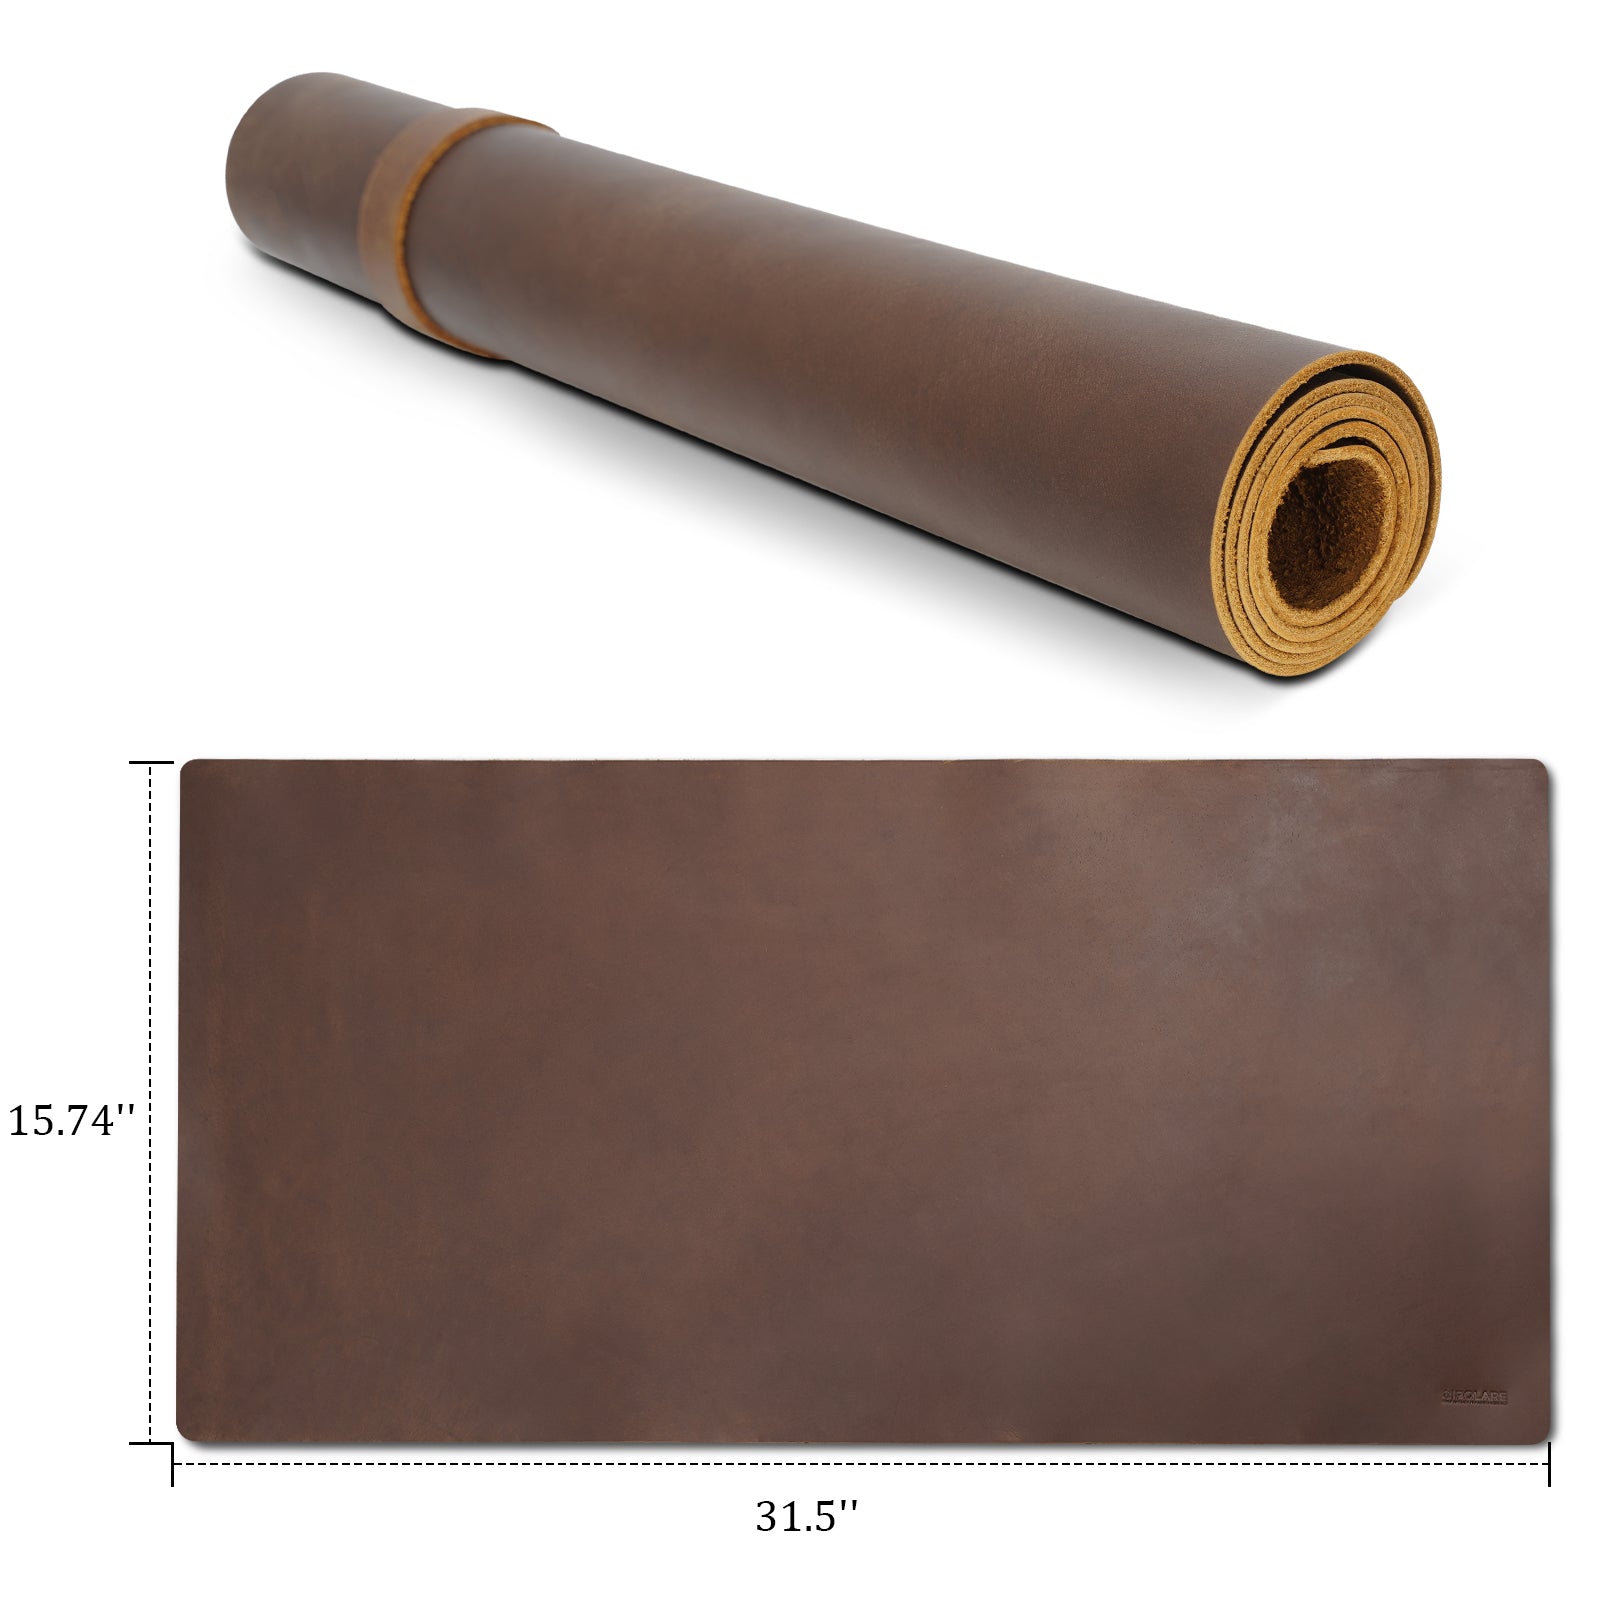 Dark Brown Leather Desk Pad: Genuine Leather Mat